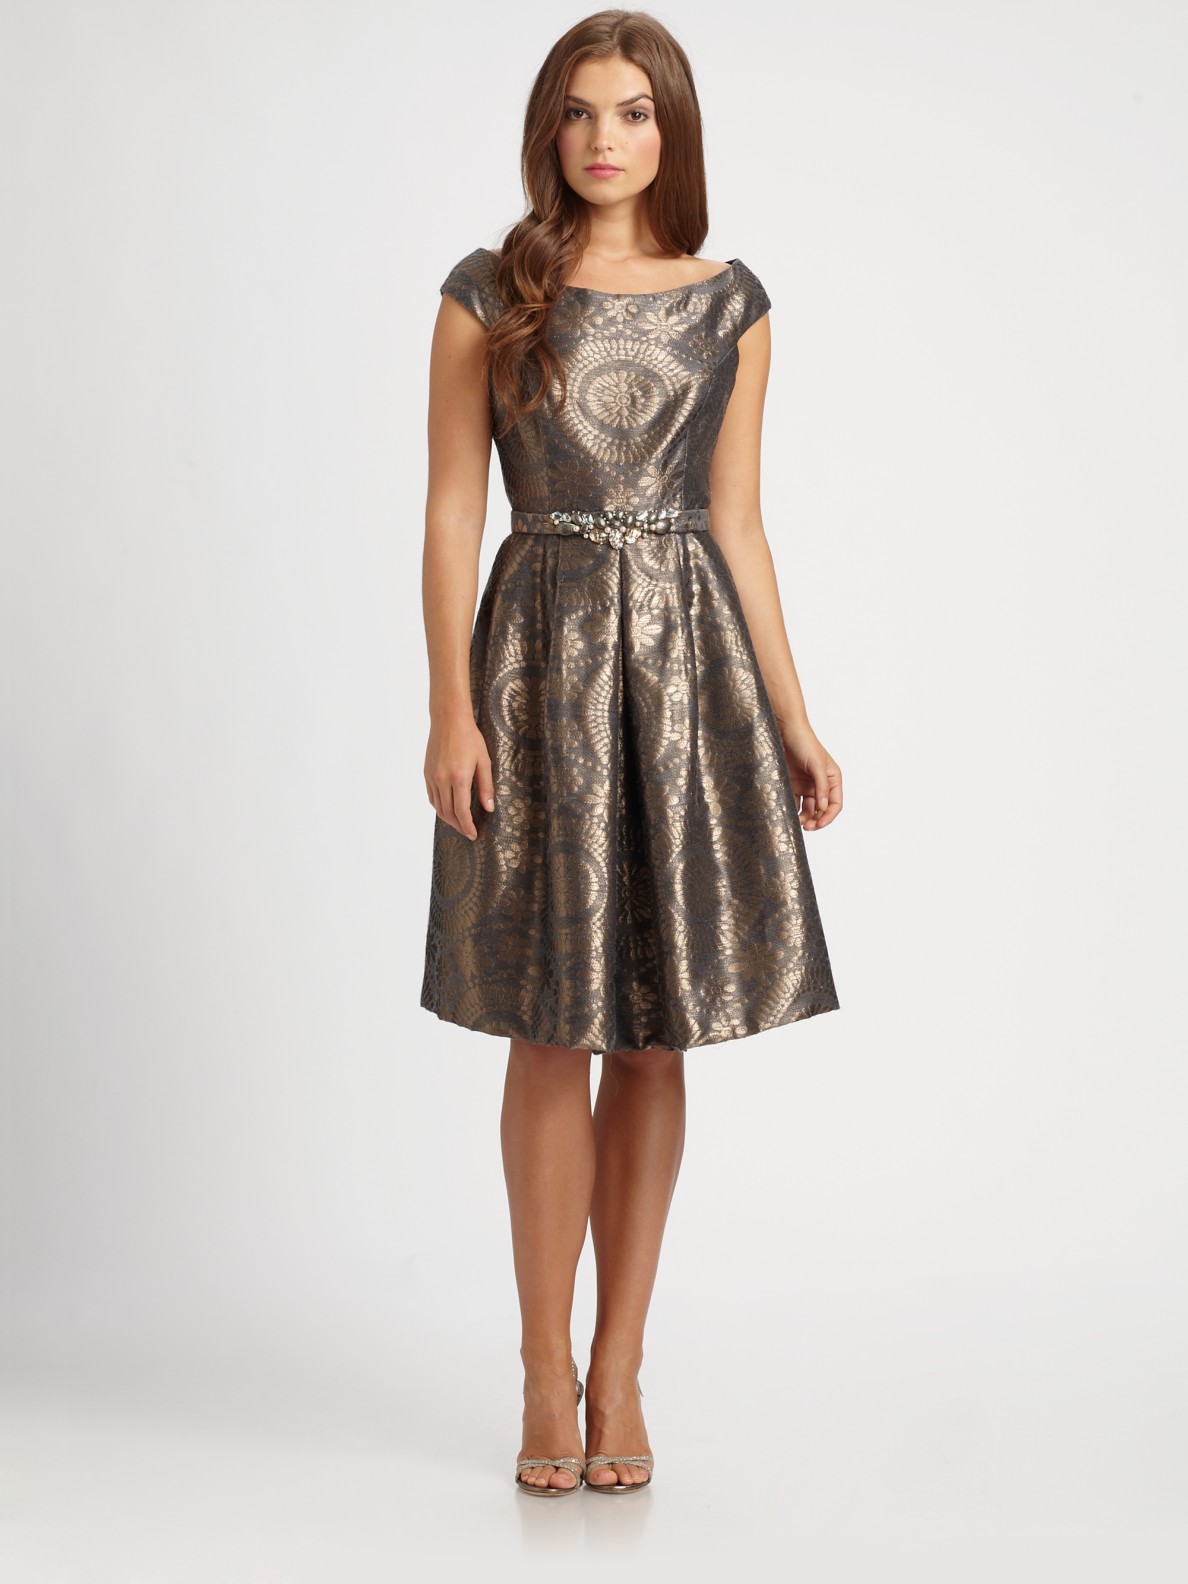 Lyst - Teri jon Brocade Dress in Brown